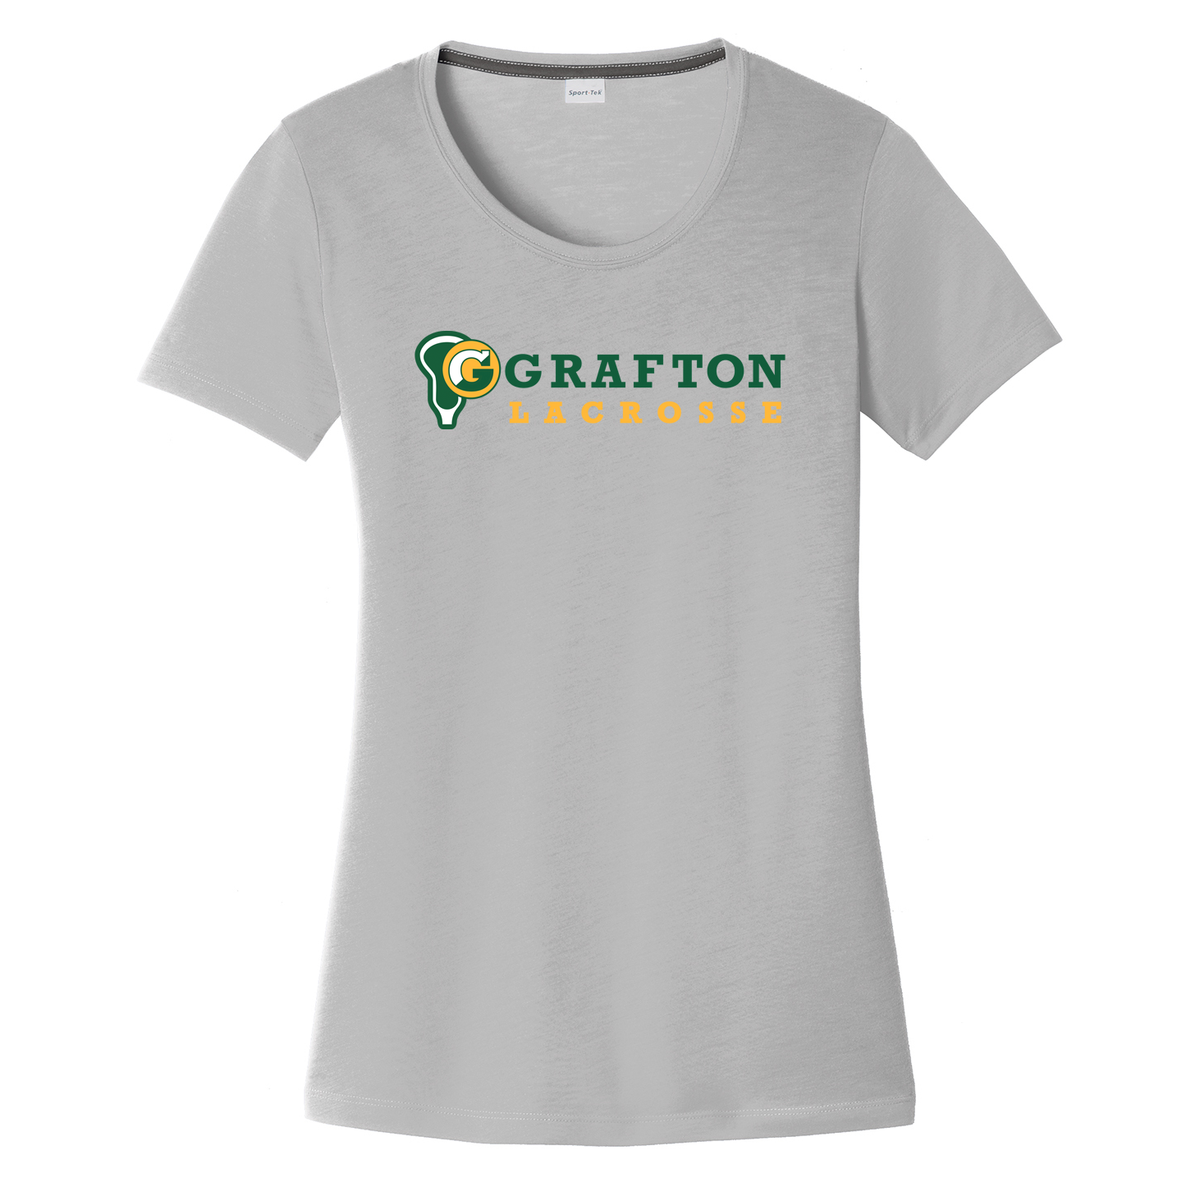 Grafton Lacrosse  Women's CottonTouch Performance T-Shirt